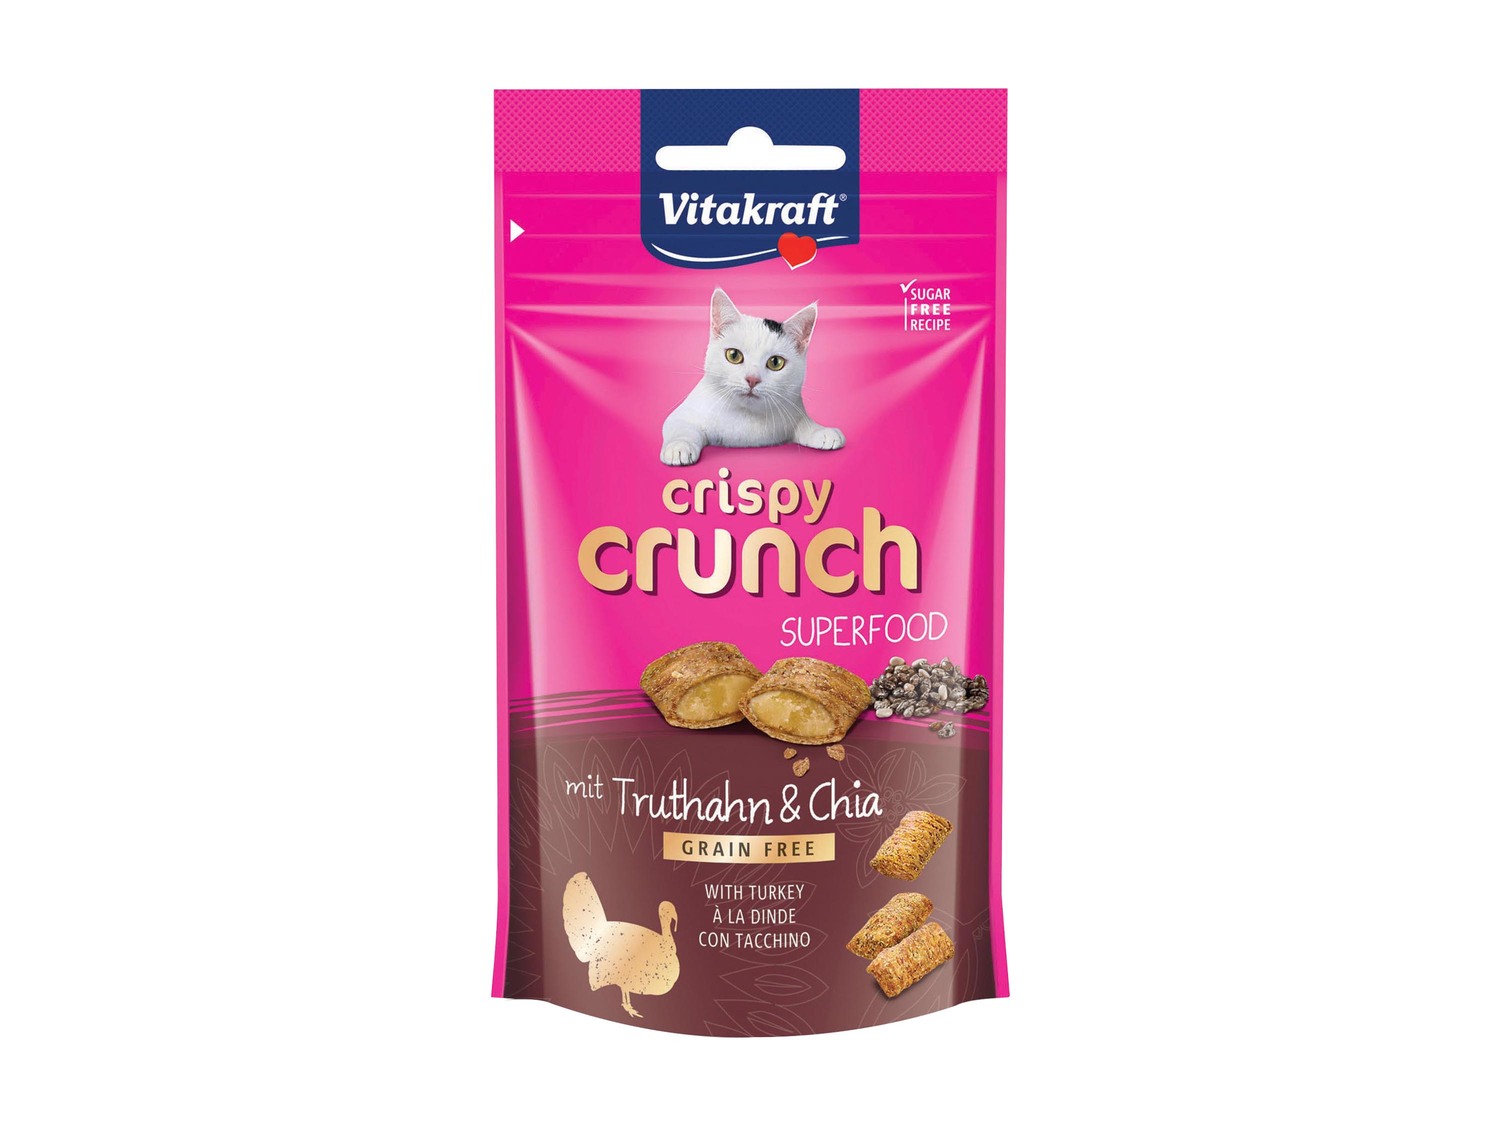 Crispy Crunch Superfood Vitakraft, prezzo 0.99 &#8364; 
- Snack con anatra e ...